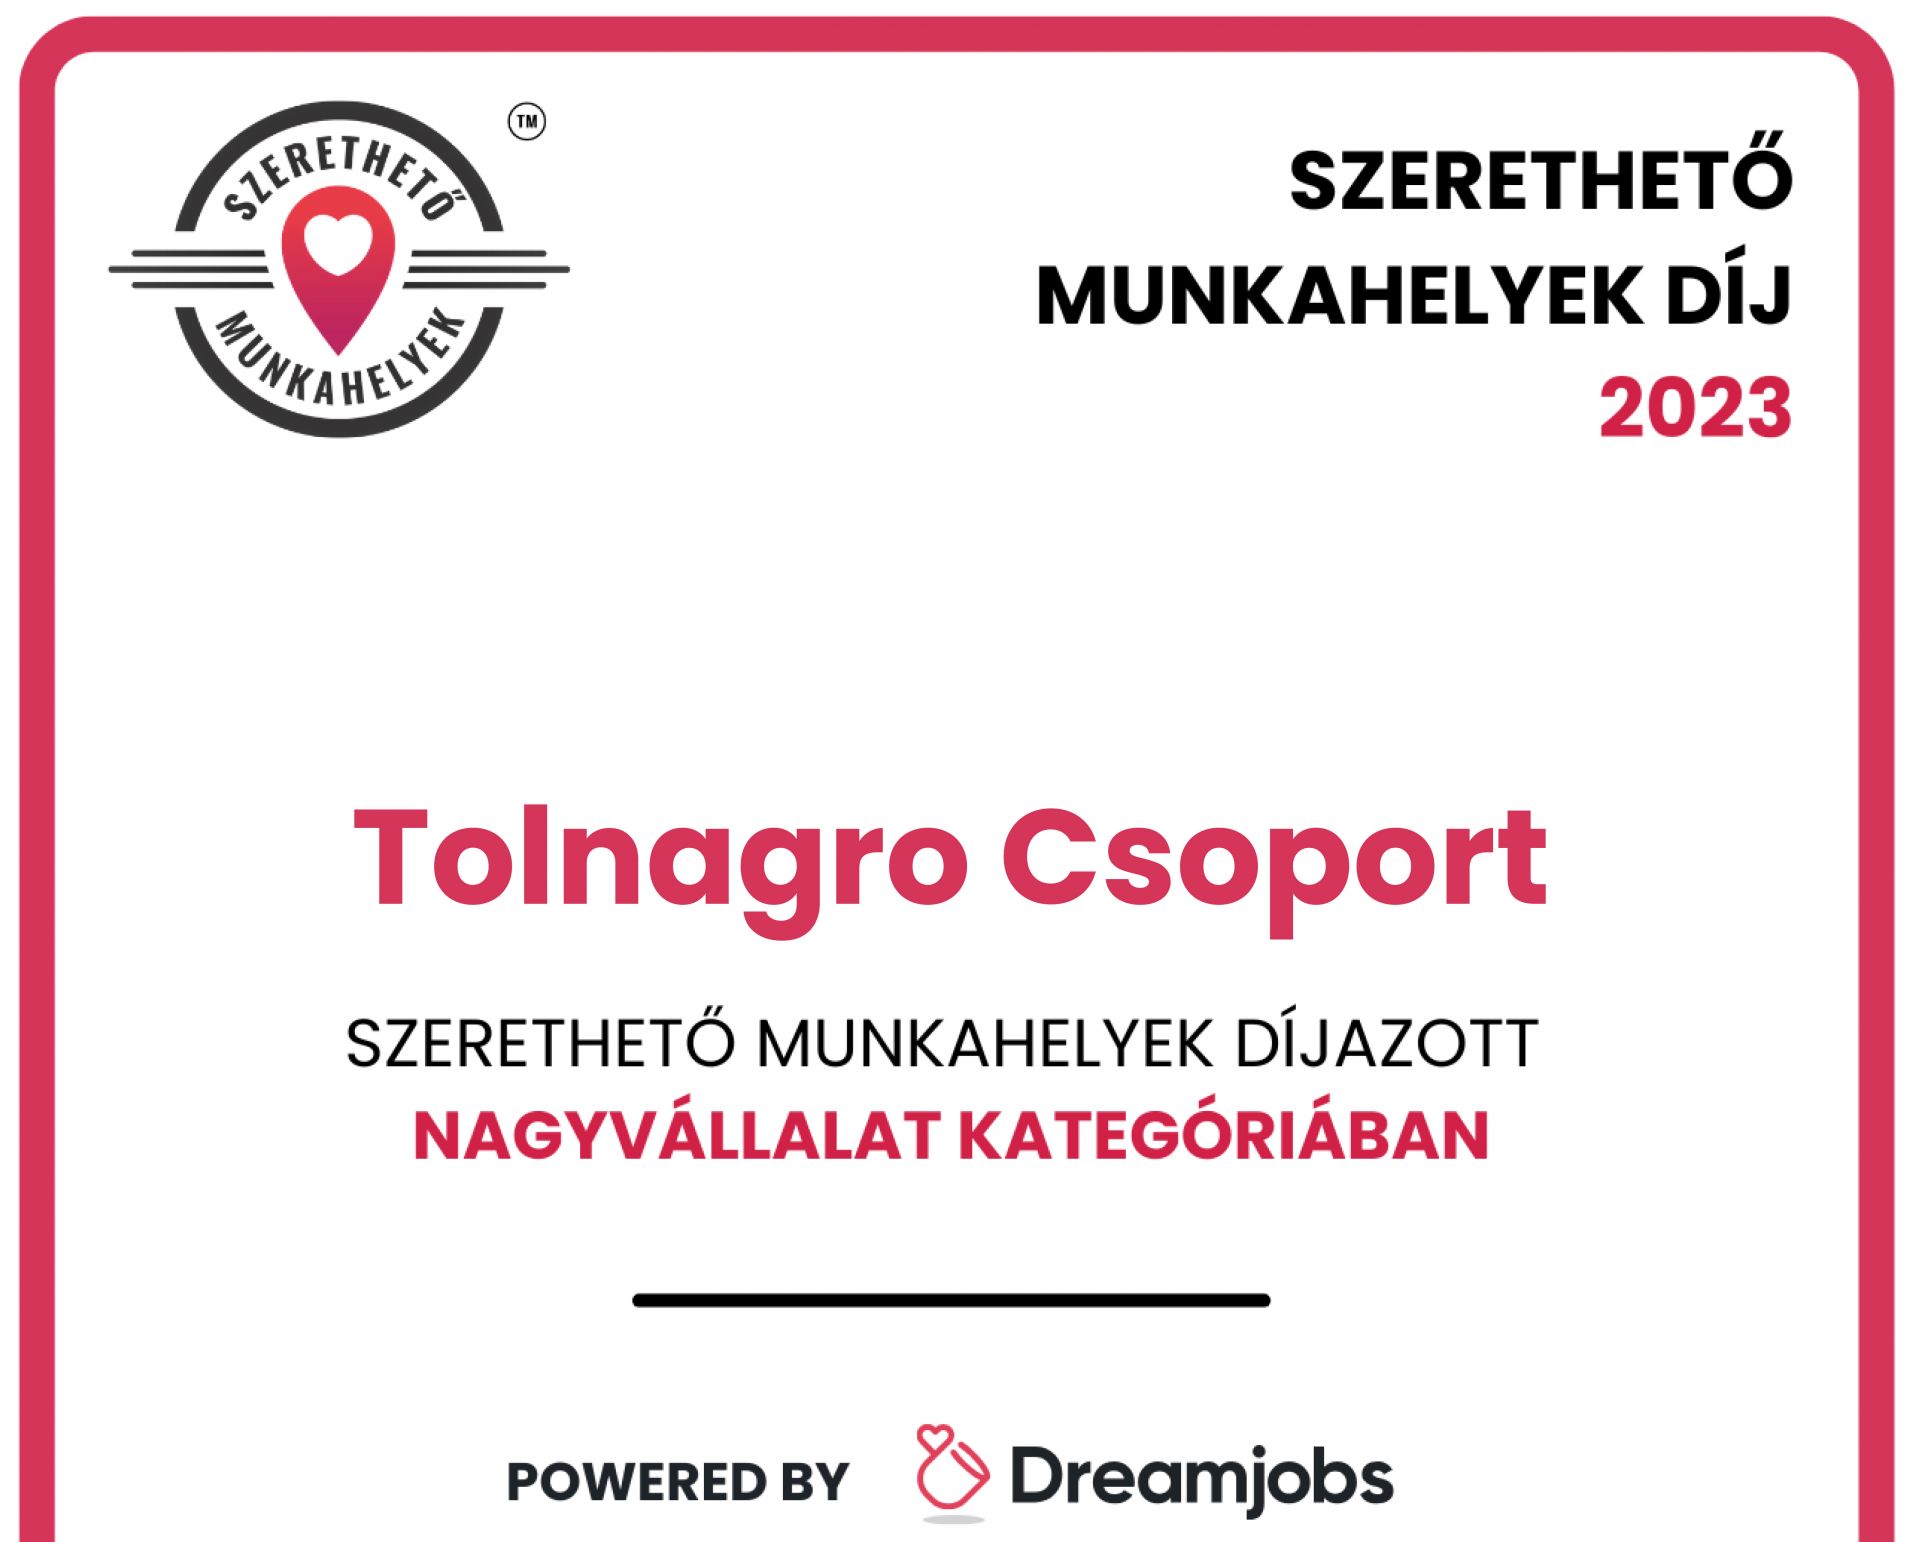 Tolnagro hat den Lovely Workplaces Award erhalten!